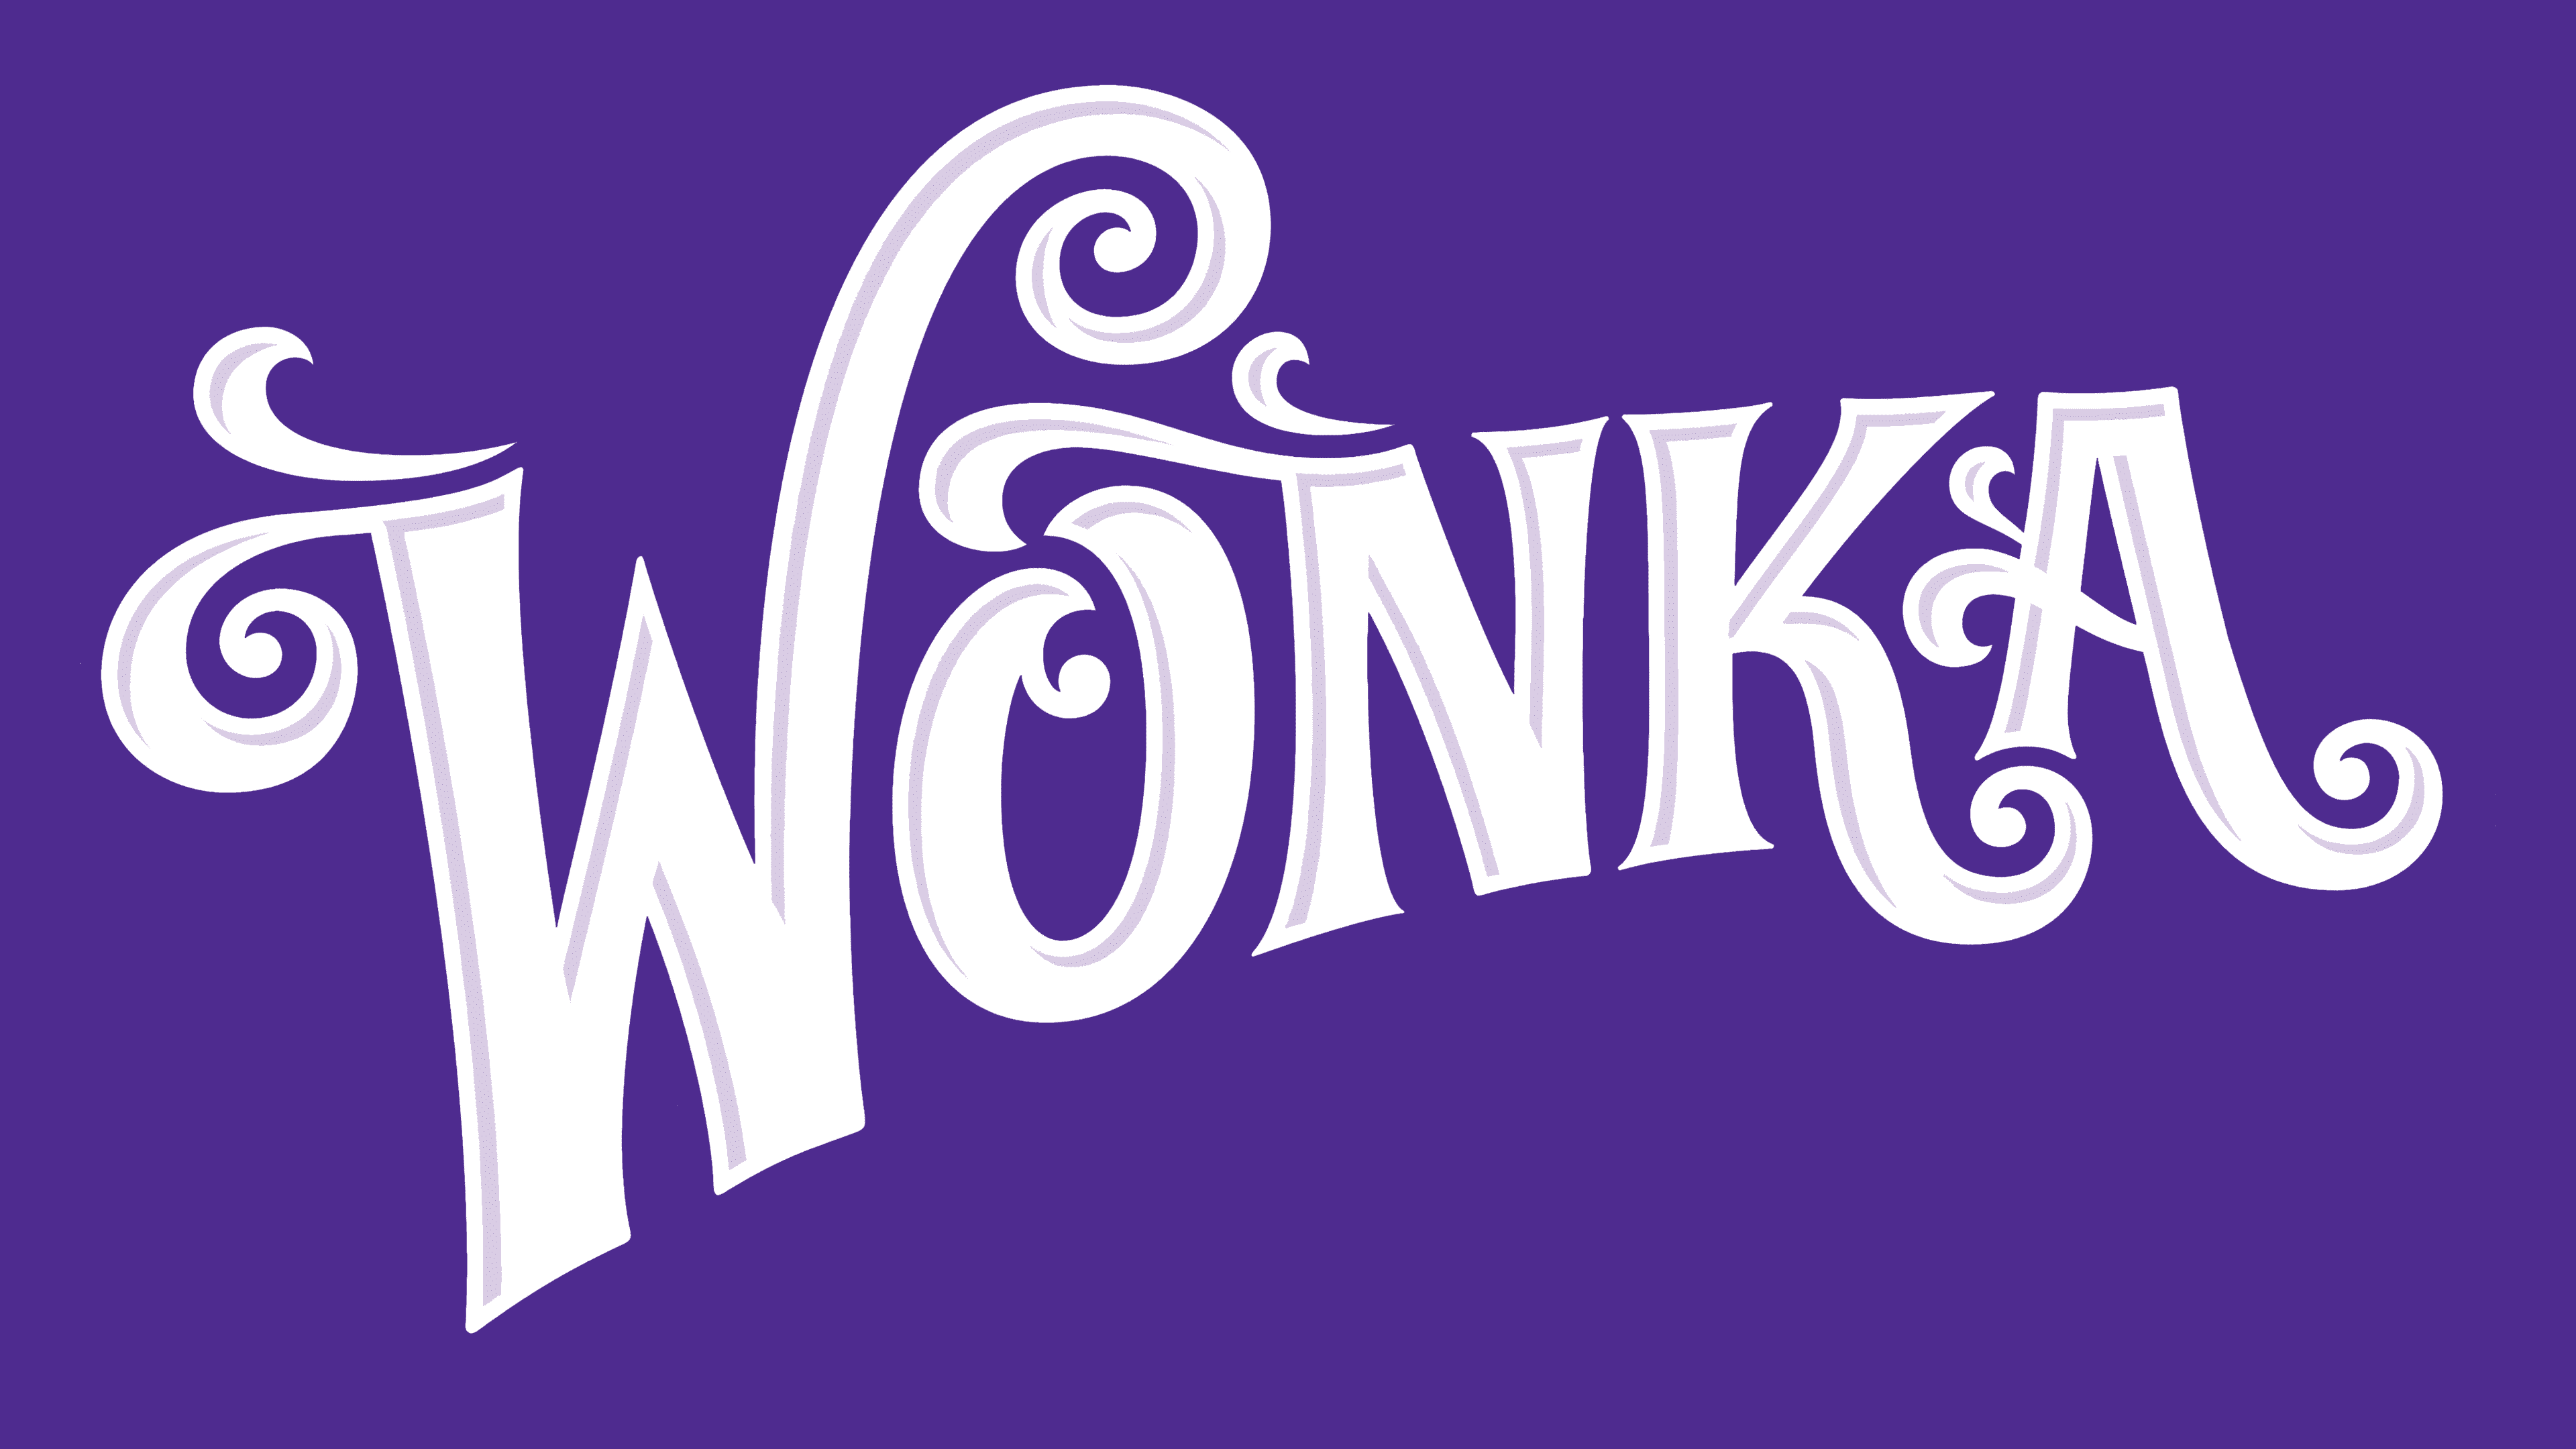 wonka logo